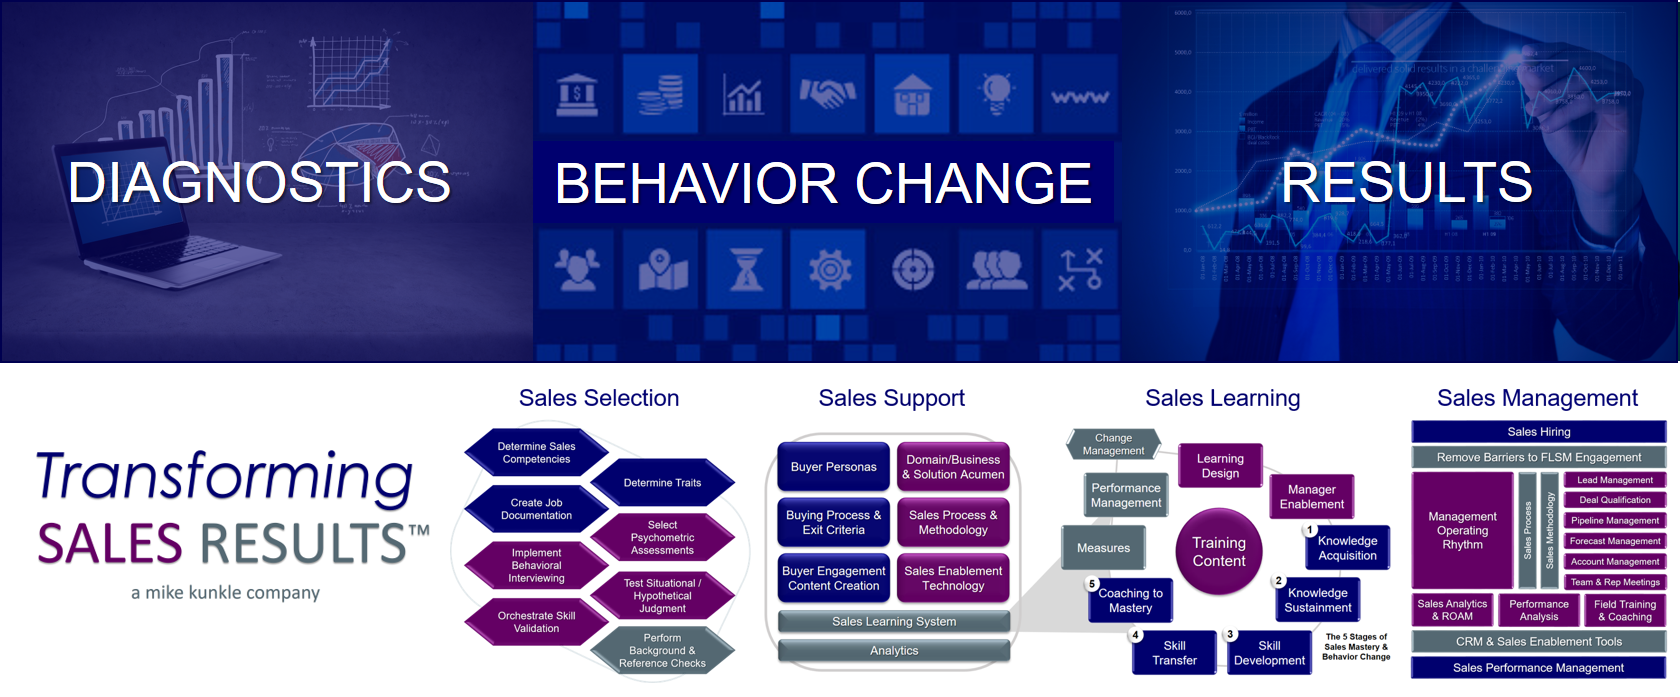 TSR Services - Diagnose Behavior Change Results